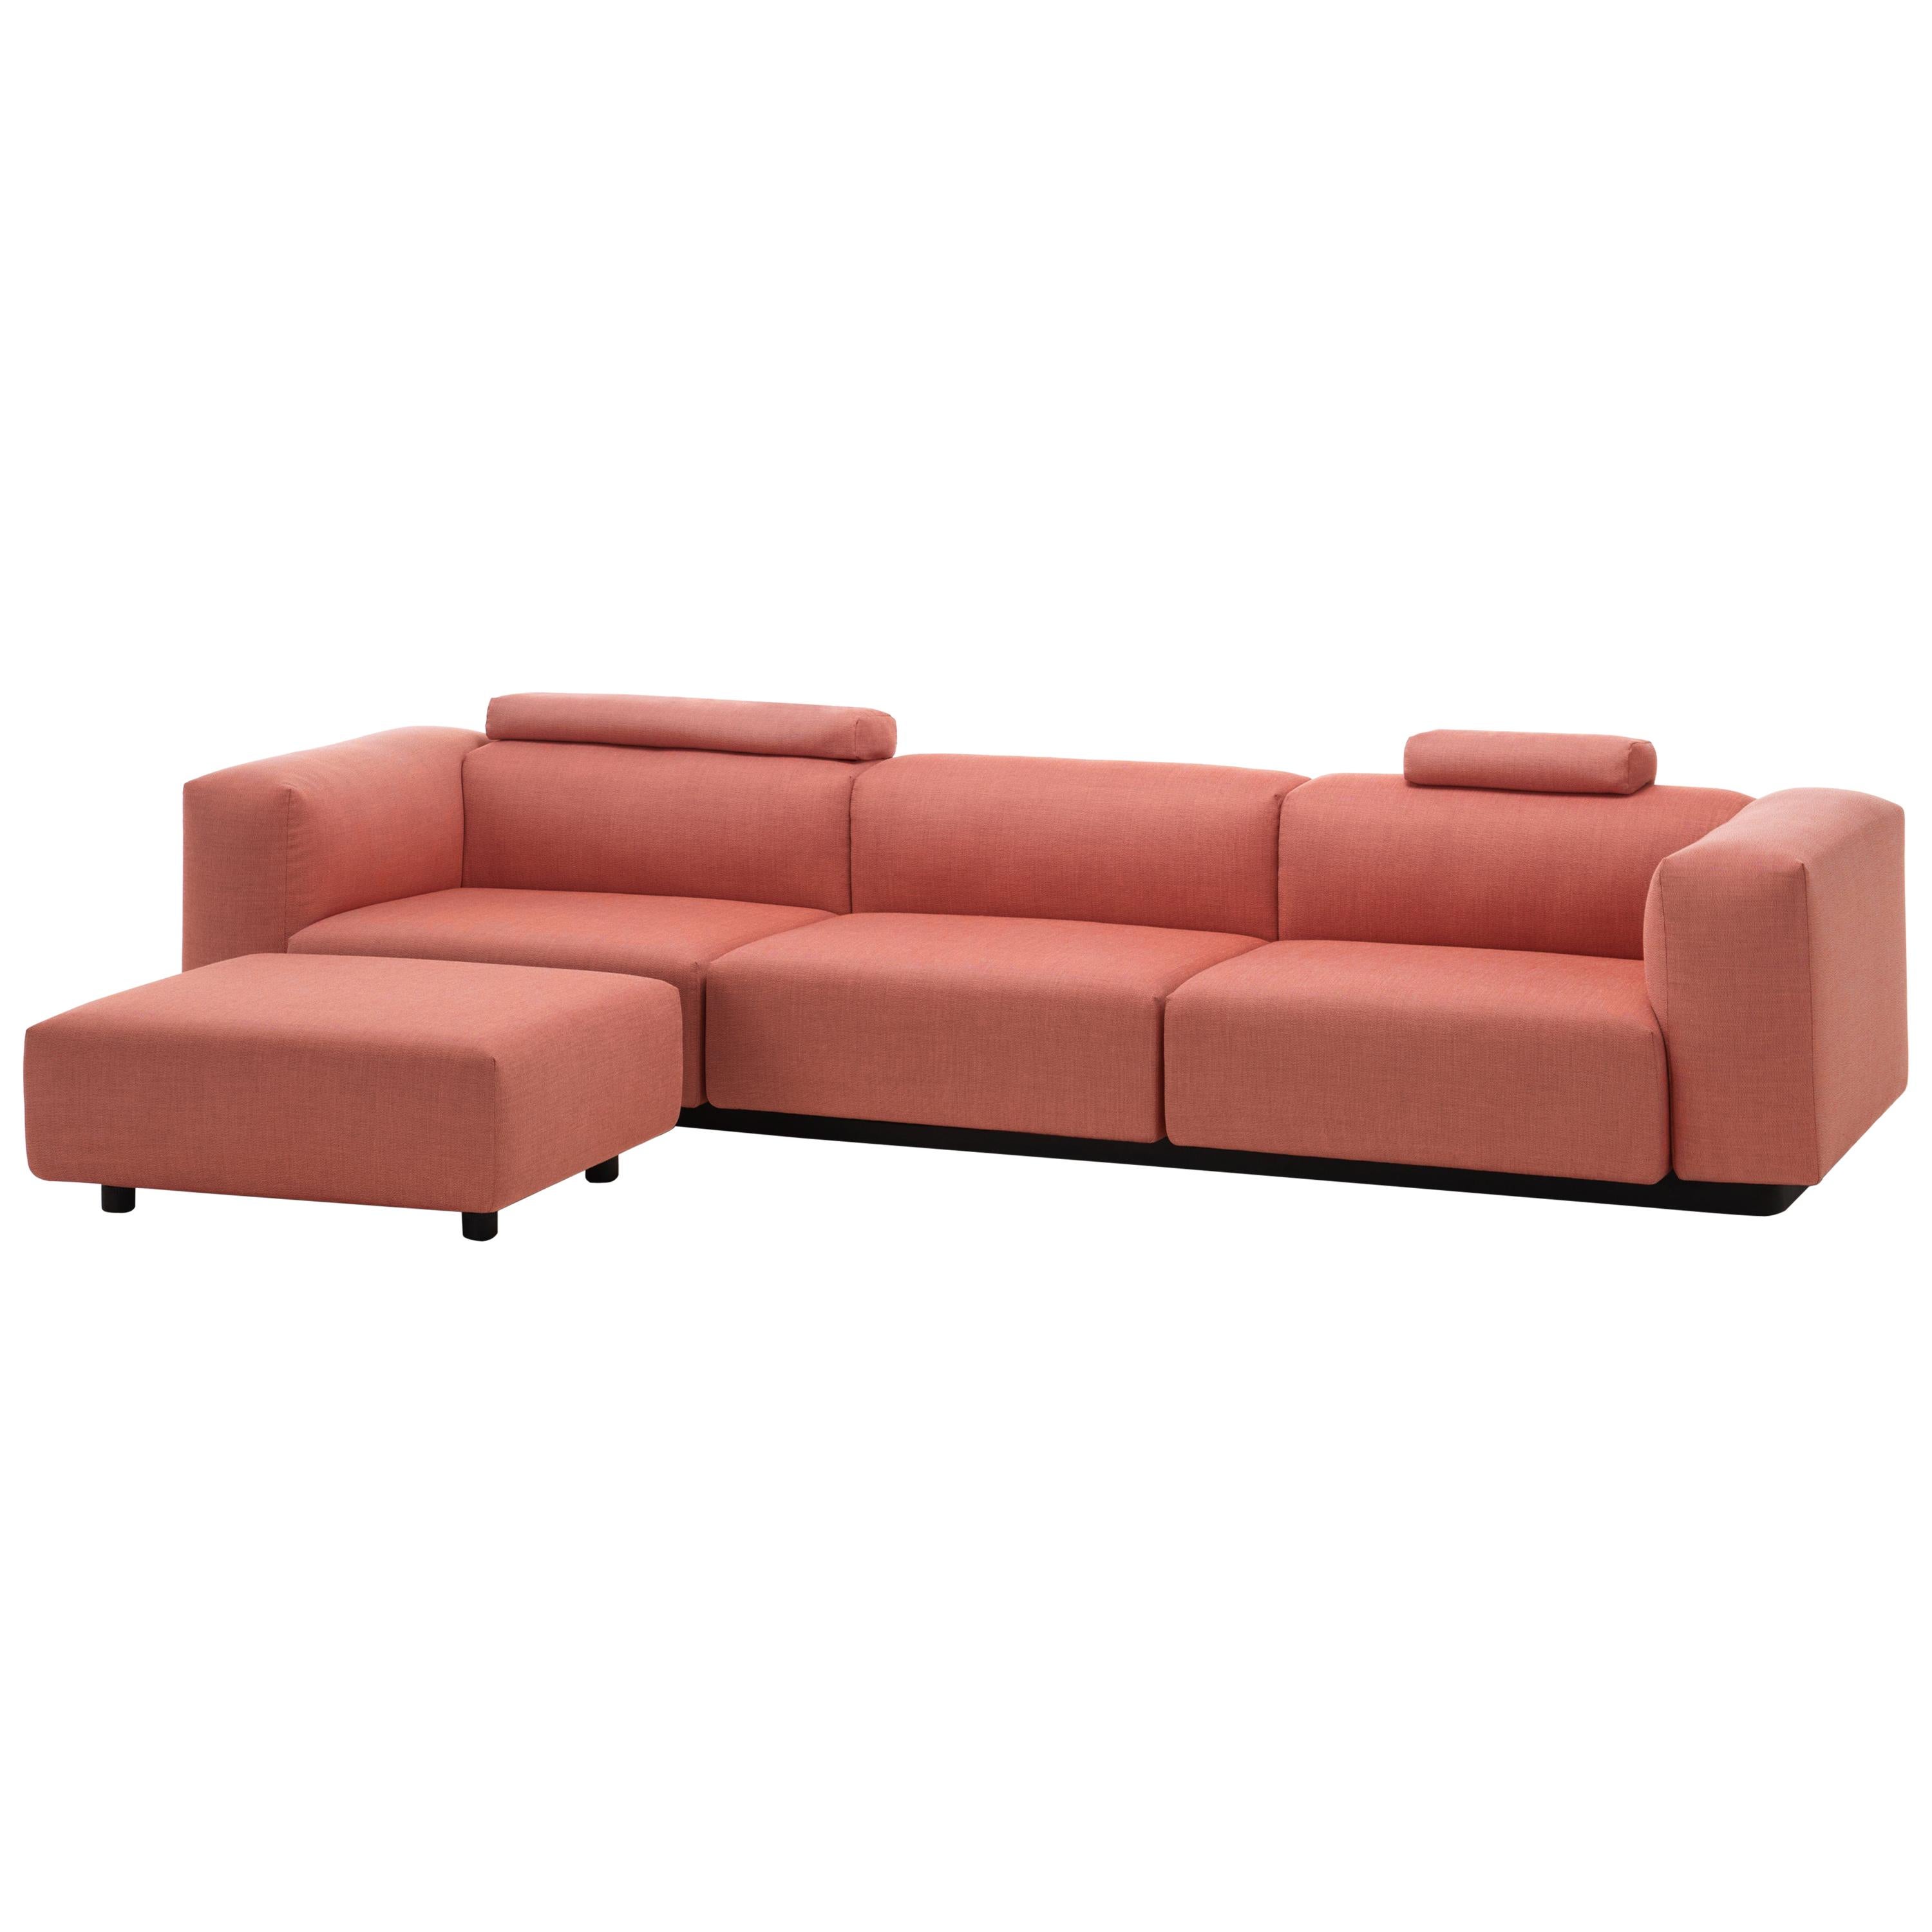 Vitra Soft Modular Rose & Orange 3-Seat Sofa w/Ottoman & Cushion Jasper Morrison For Sale